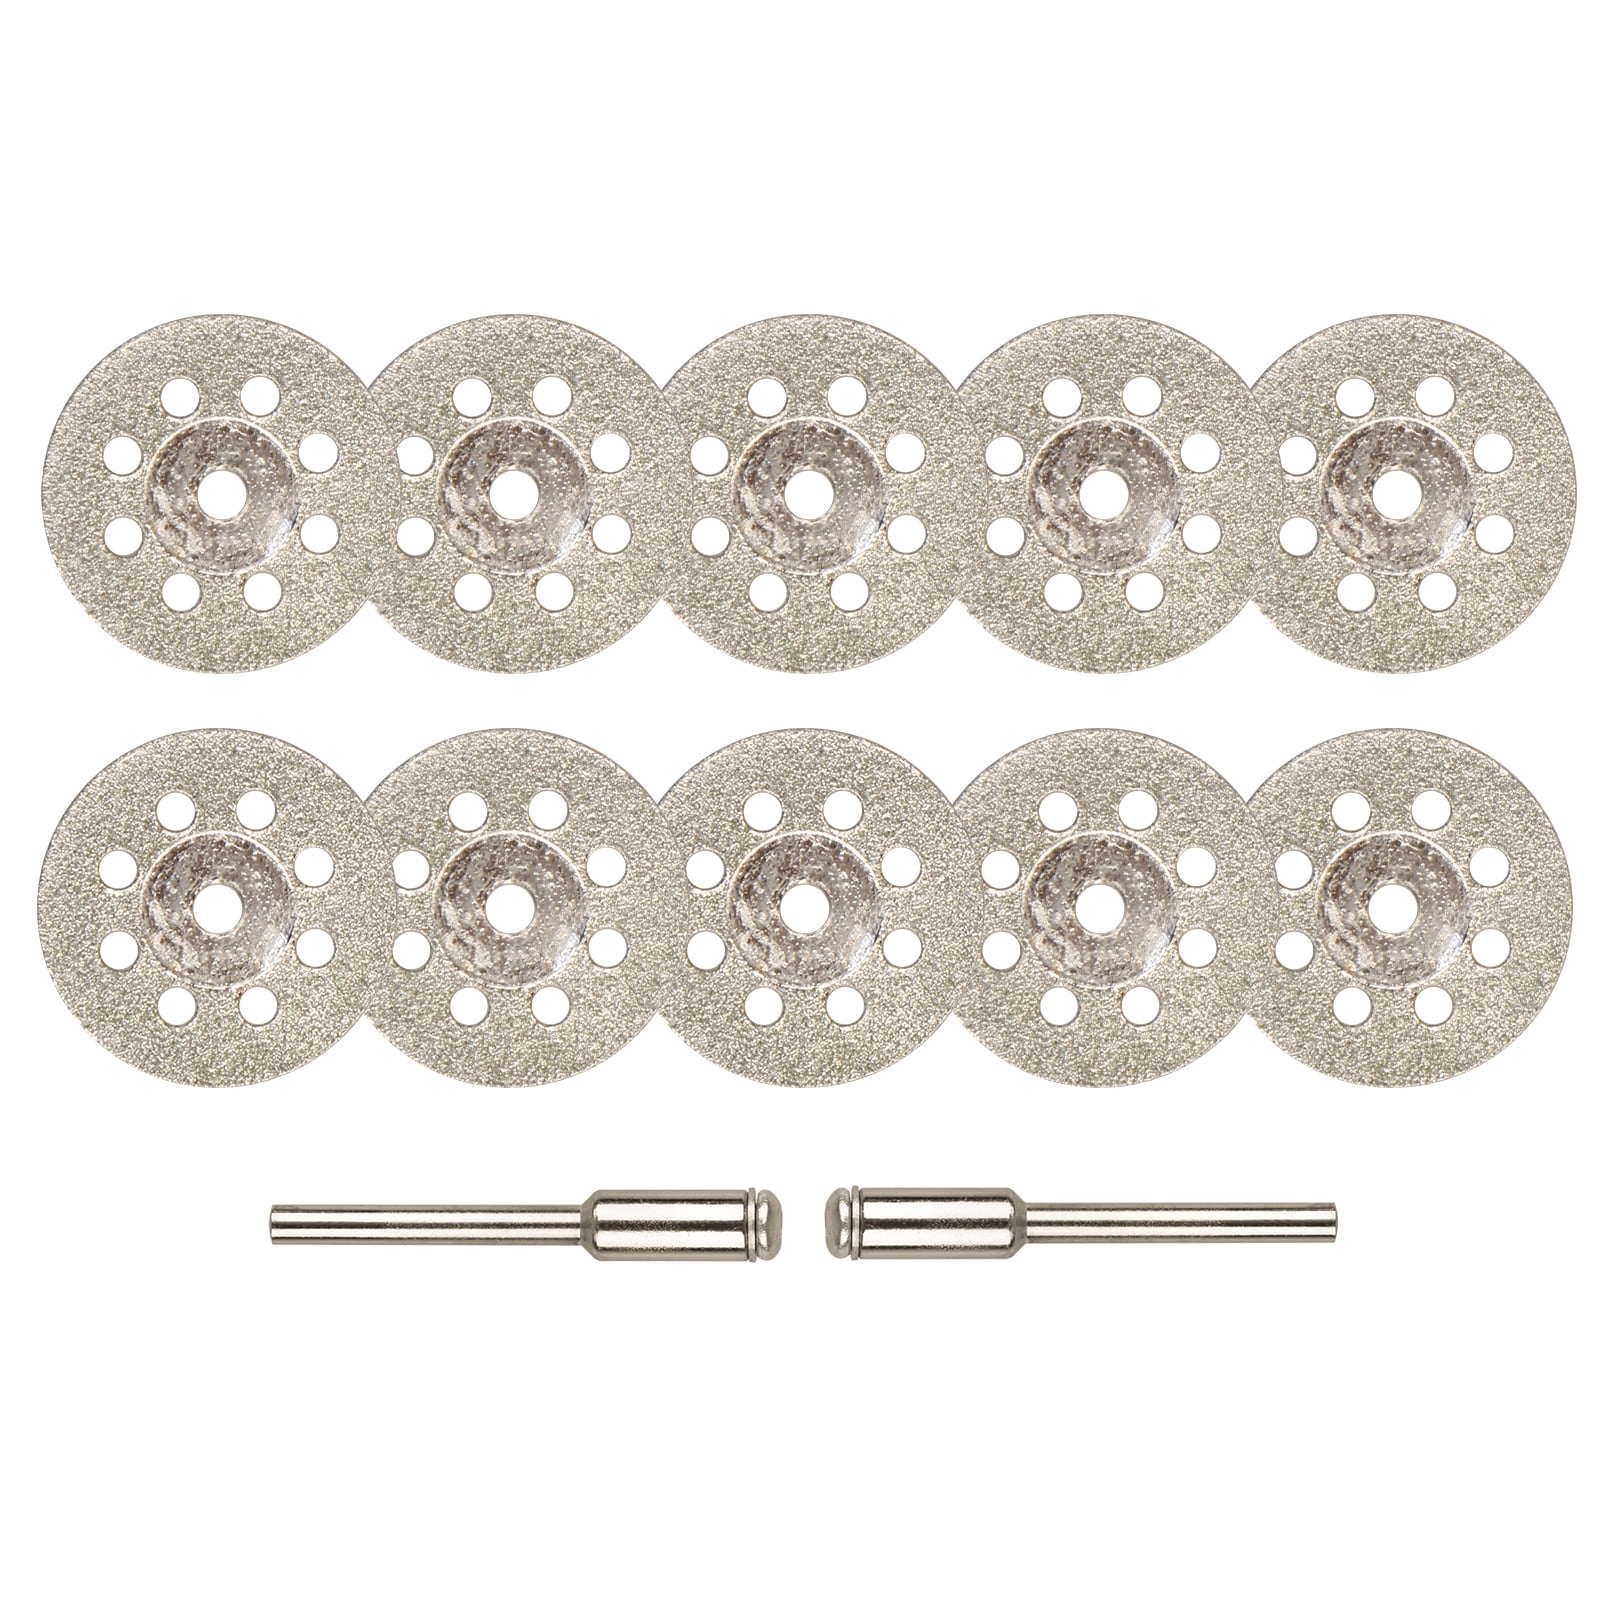 10PCS Diamond Cutting Wheels For Dremel Rotary Tool Cut Off Disc Saw Blades Set 